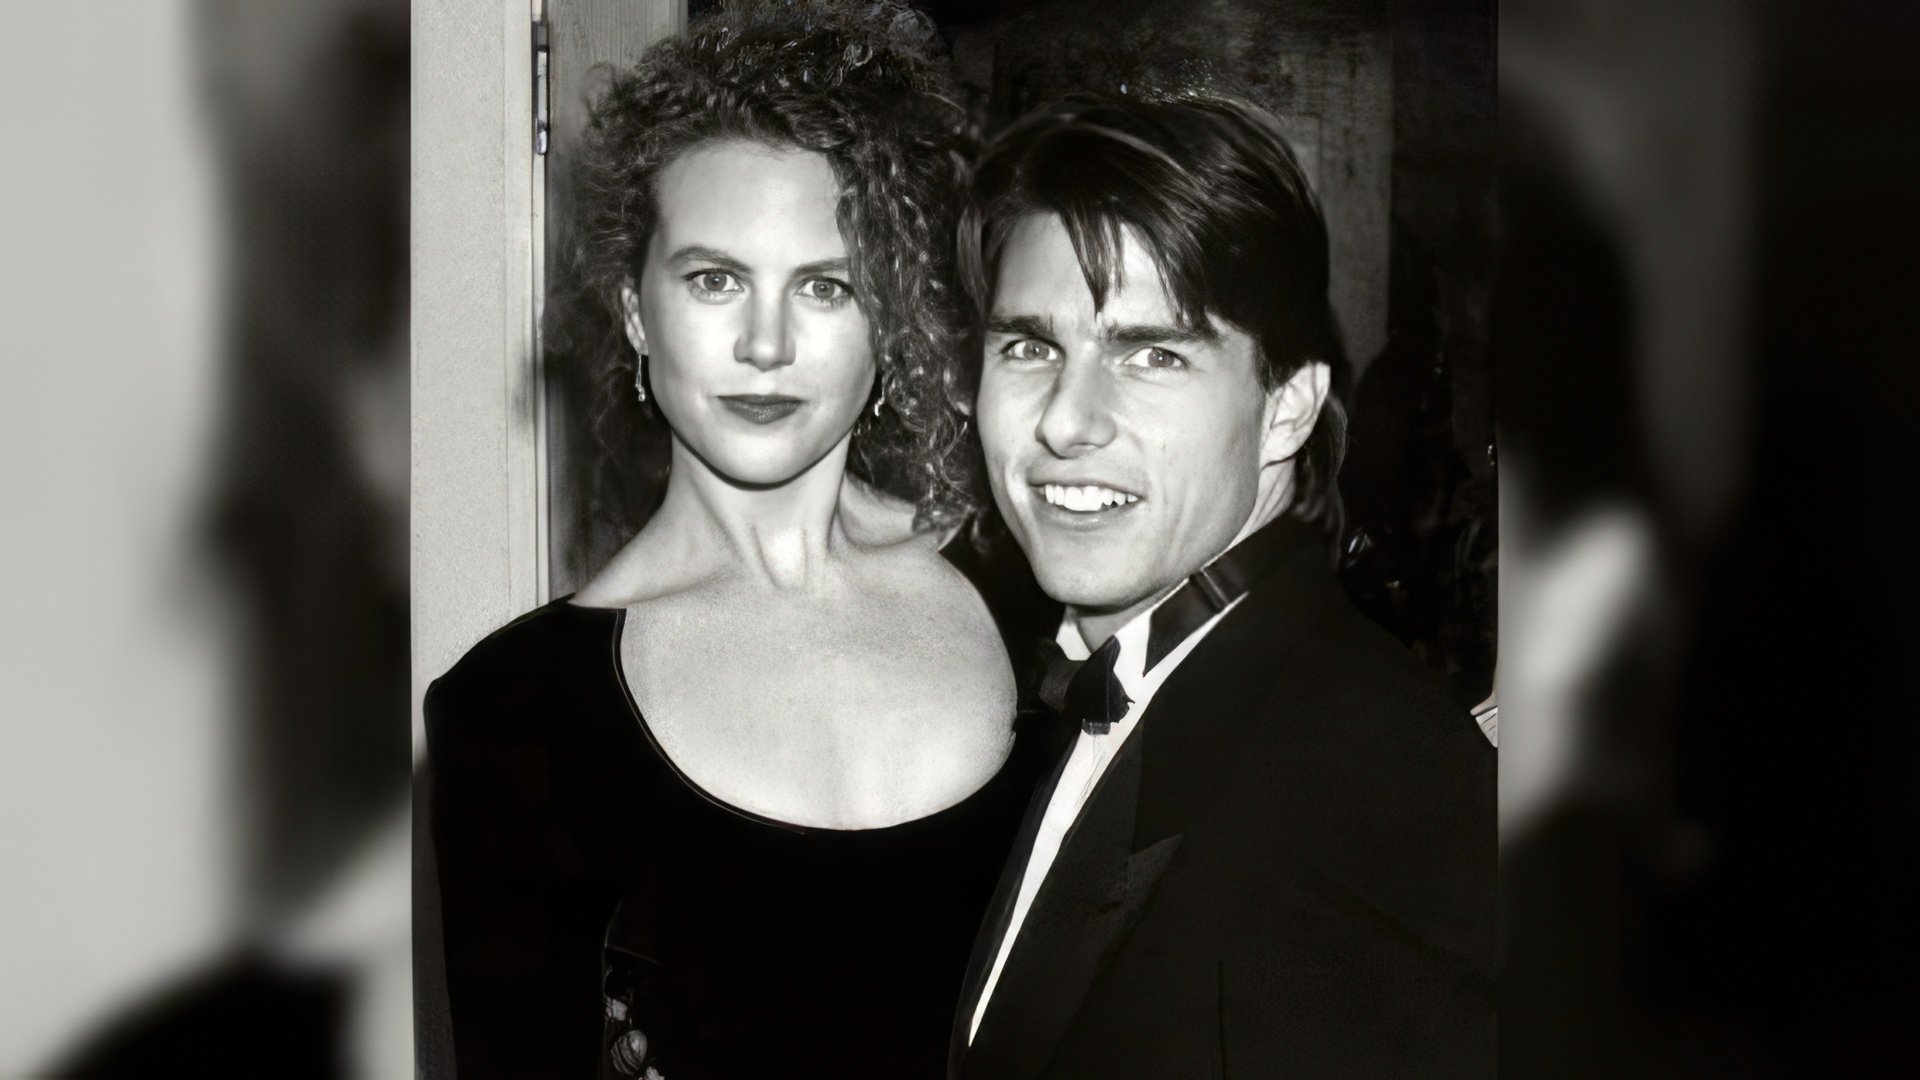 Tom Cruise and Nicole Kidman at the Academy Awards 1991